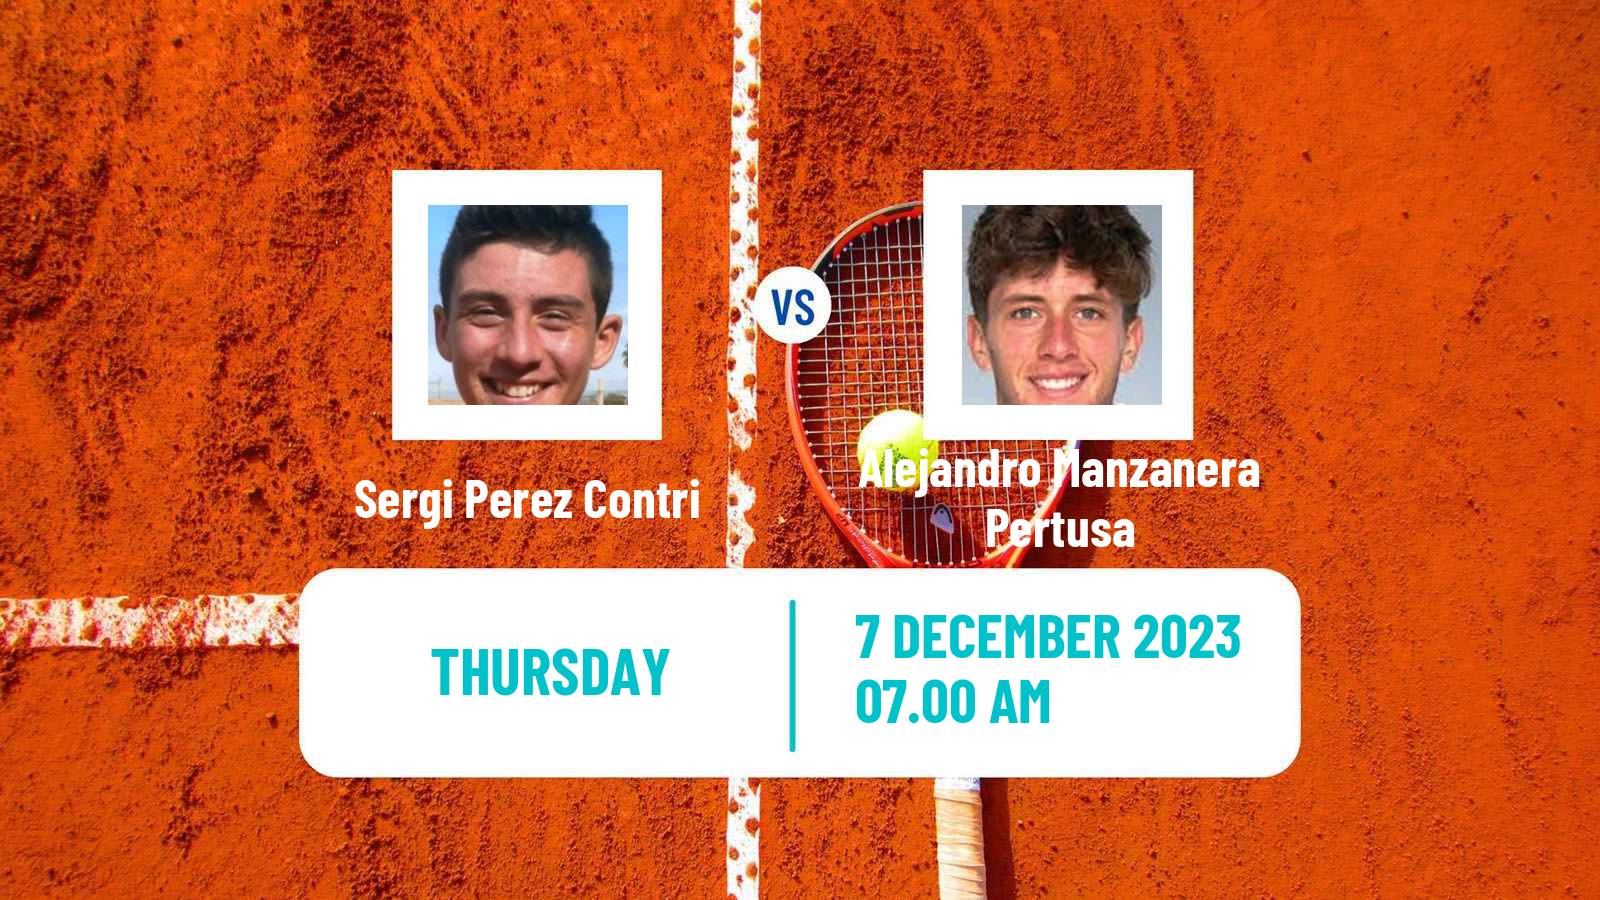 Tennis ITF M15 Madrid 3 Men Sergi Perez Contri - Alejandro Manzanera Pertusa